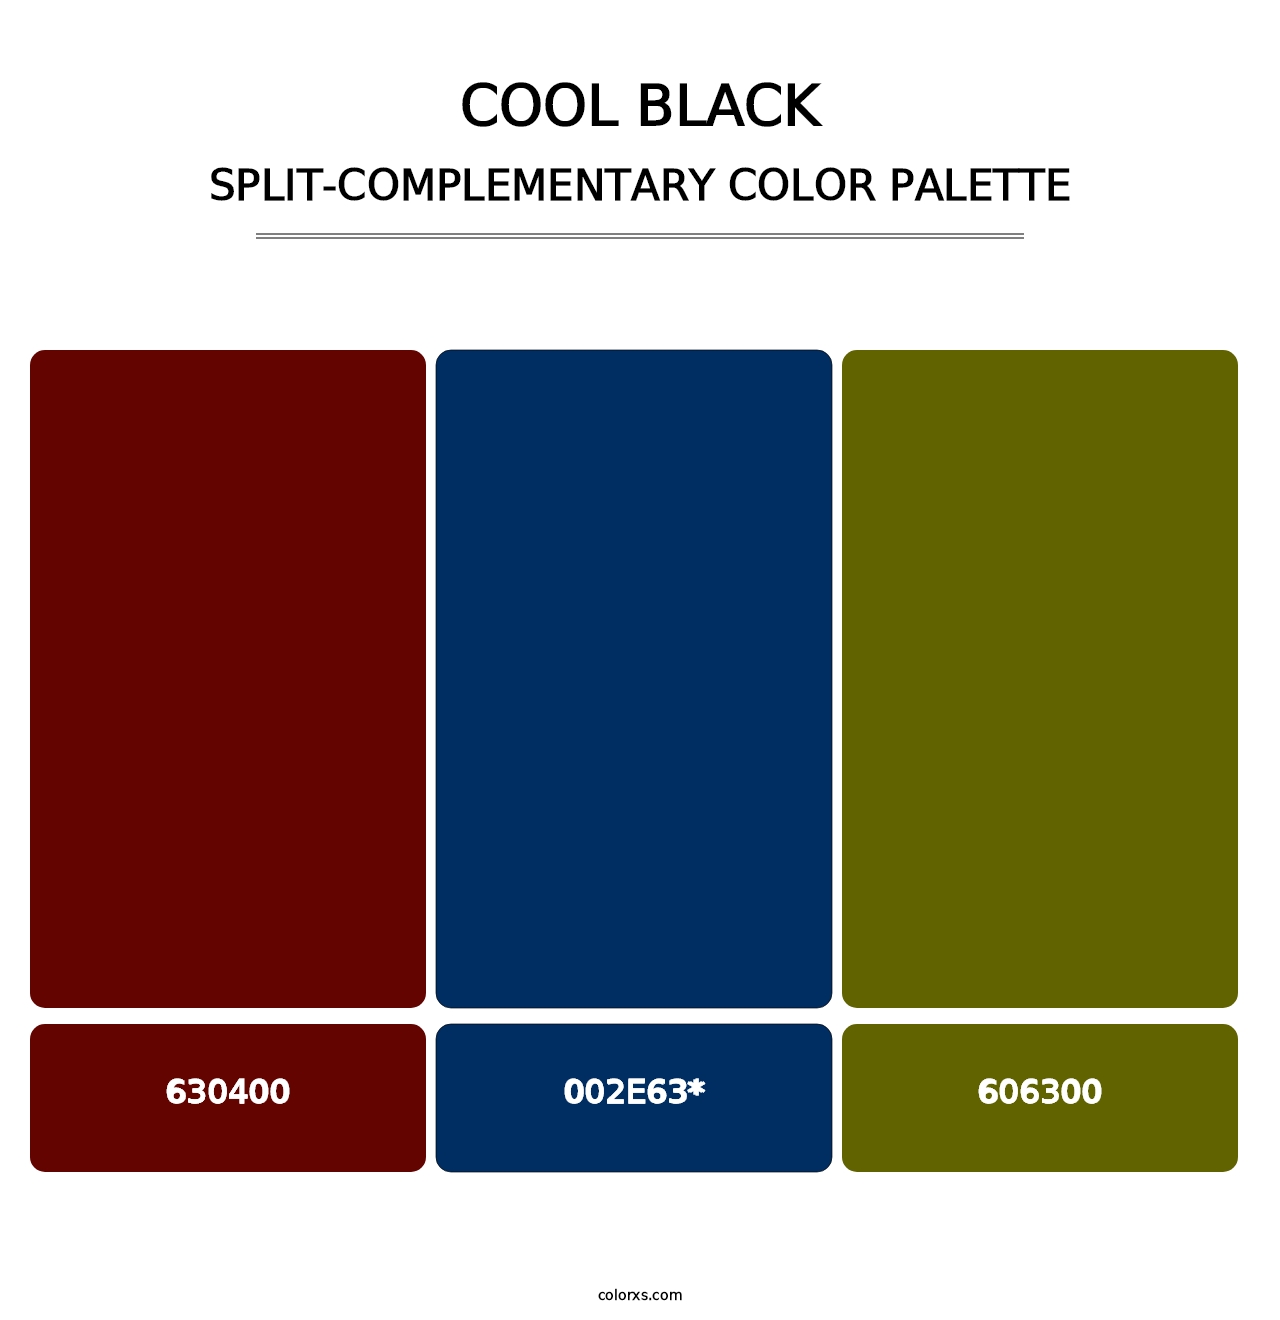 Cool Black - Split-Complementary Color Palette